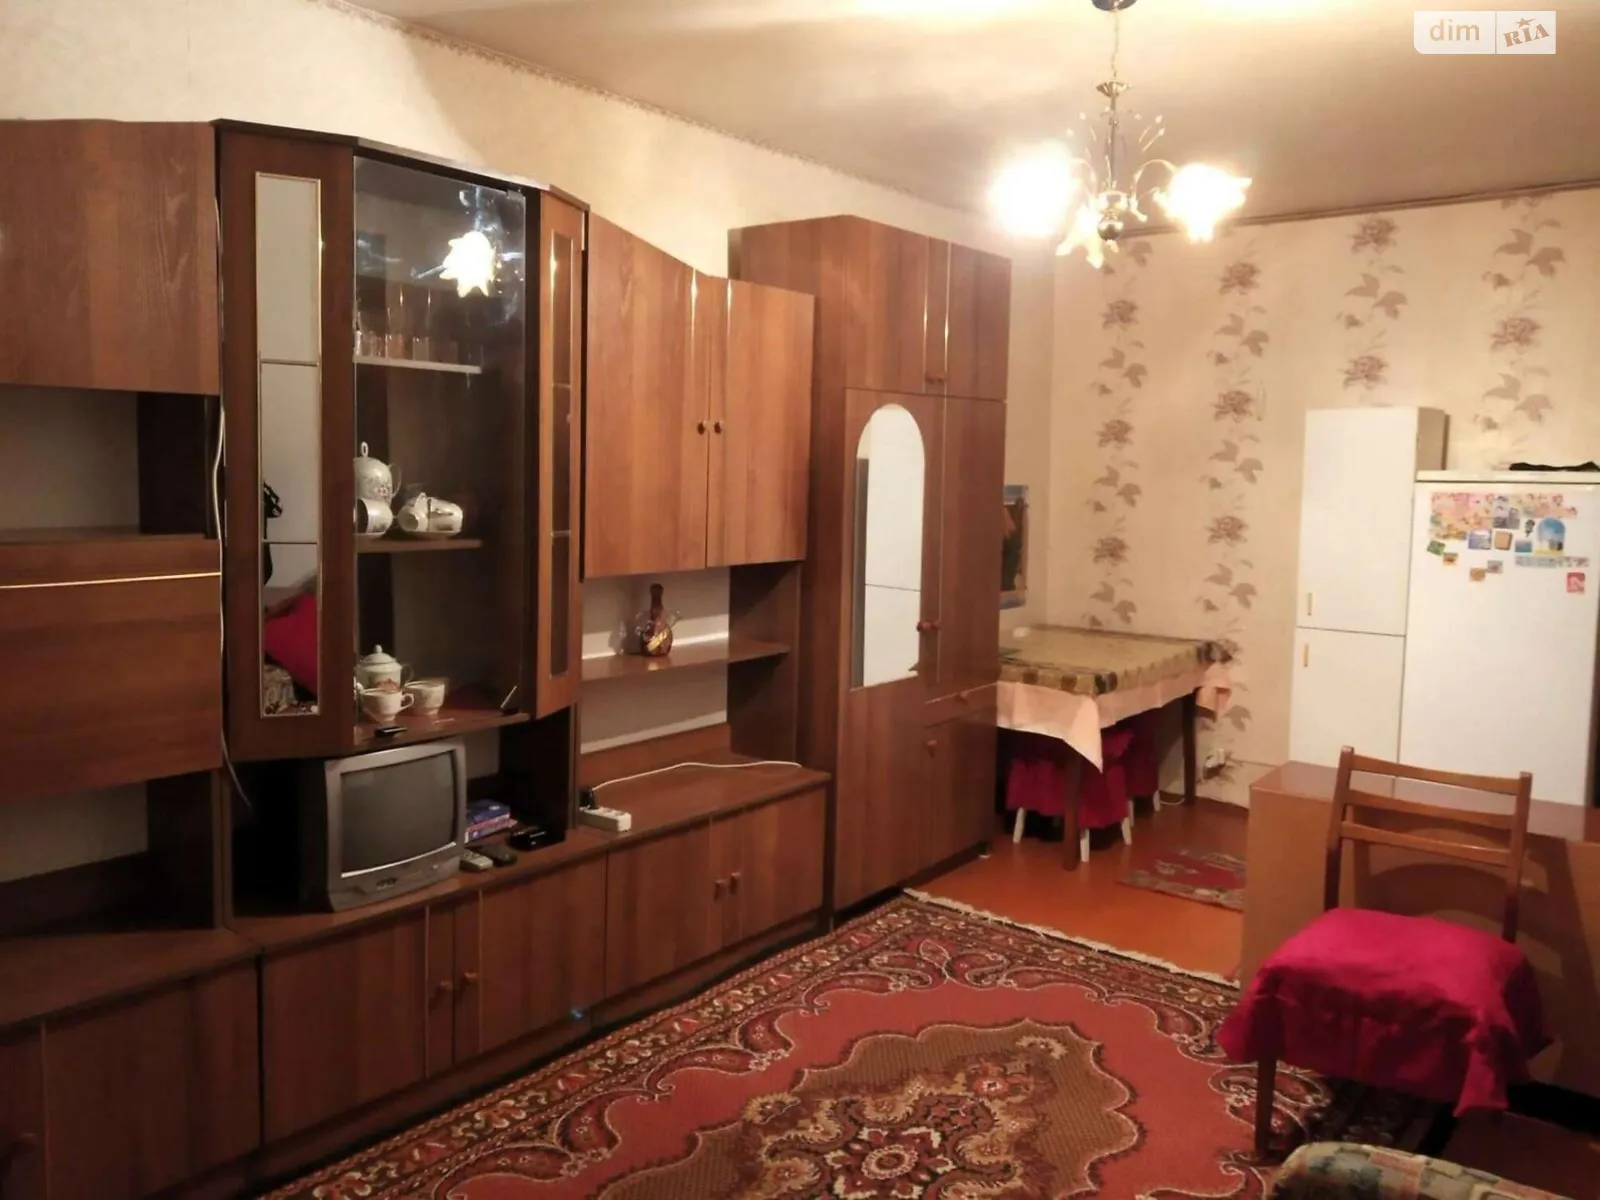 Продается комната 32 кв. м в Харькове - фото 2